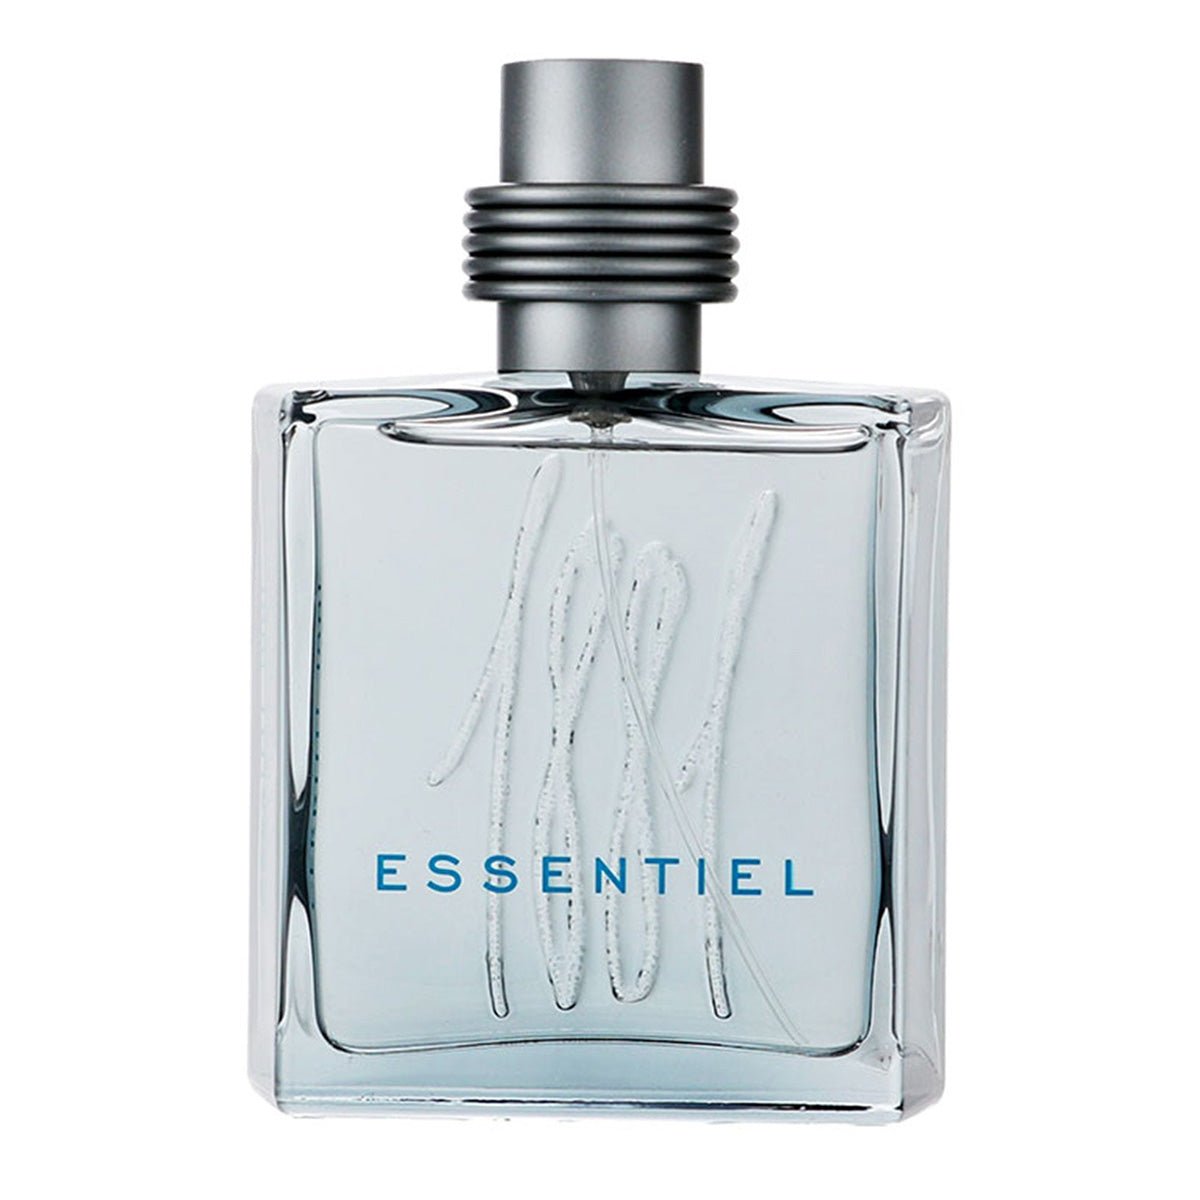 Cerruti 1881 Essentiel For Men Spray Edt 100ml -Perfume - AllurebeautypkCerruti 1881 Essentiel For Men Spray Edt 100ml -Perfume